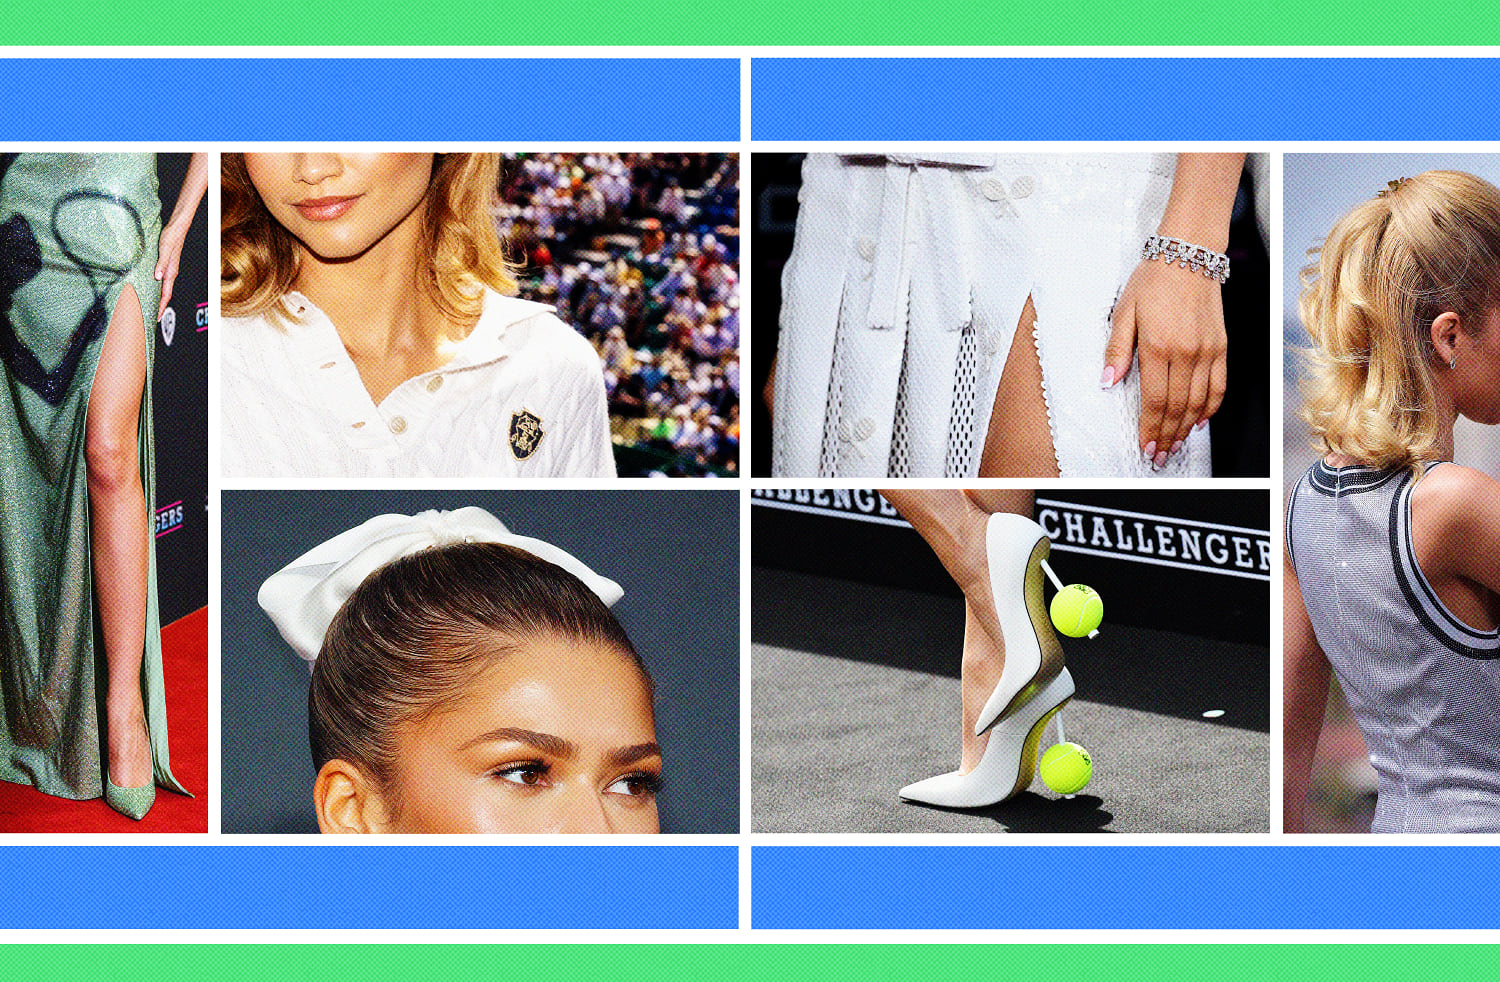 Game, set, match: 'Challengers' star Zendaya inspires 'tenniscore' styles